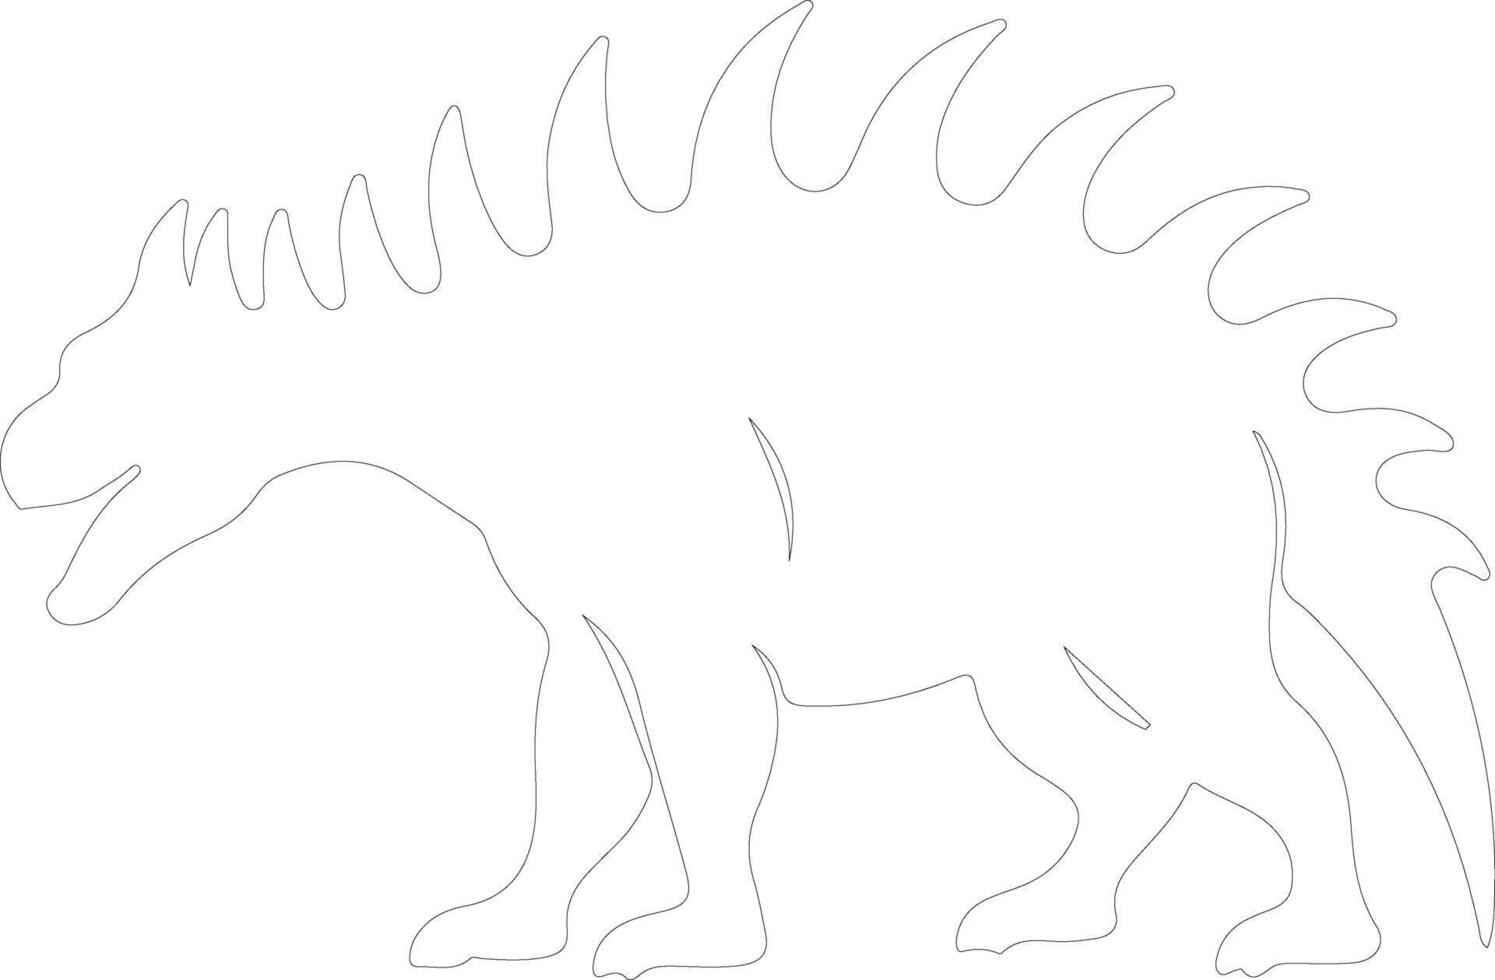 Kentrosaurus  outline silhouette vector